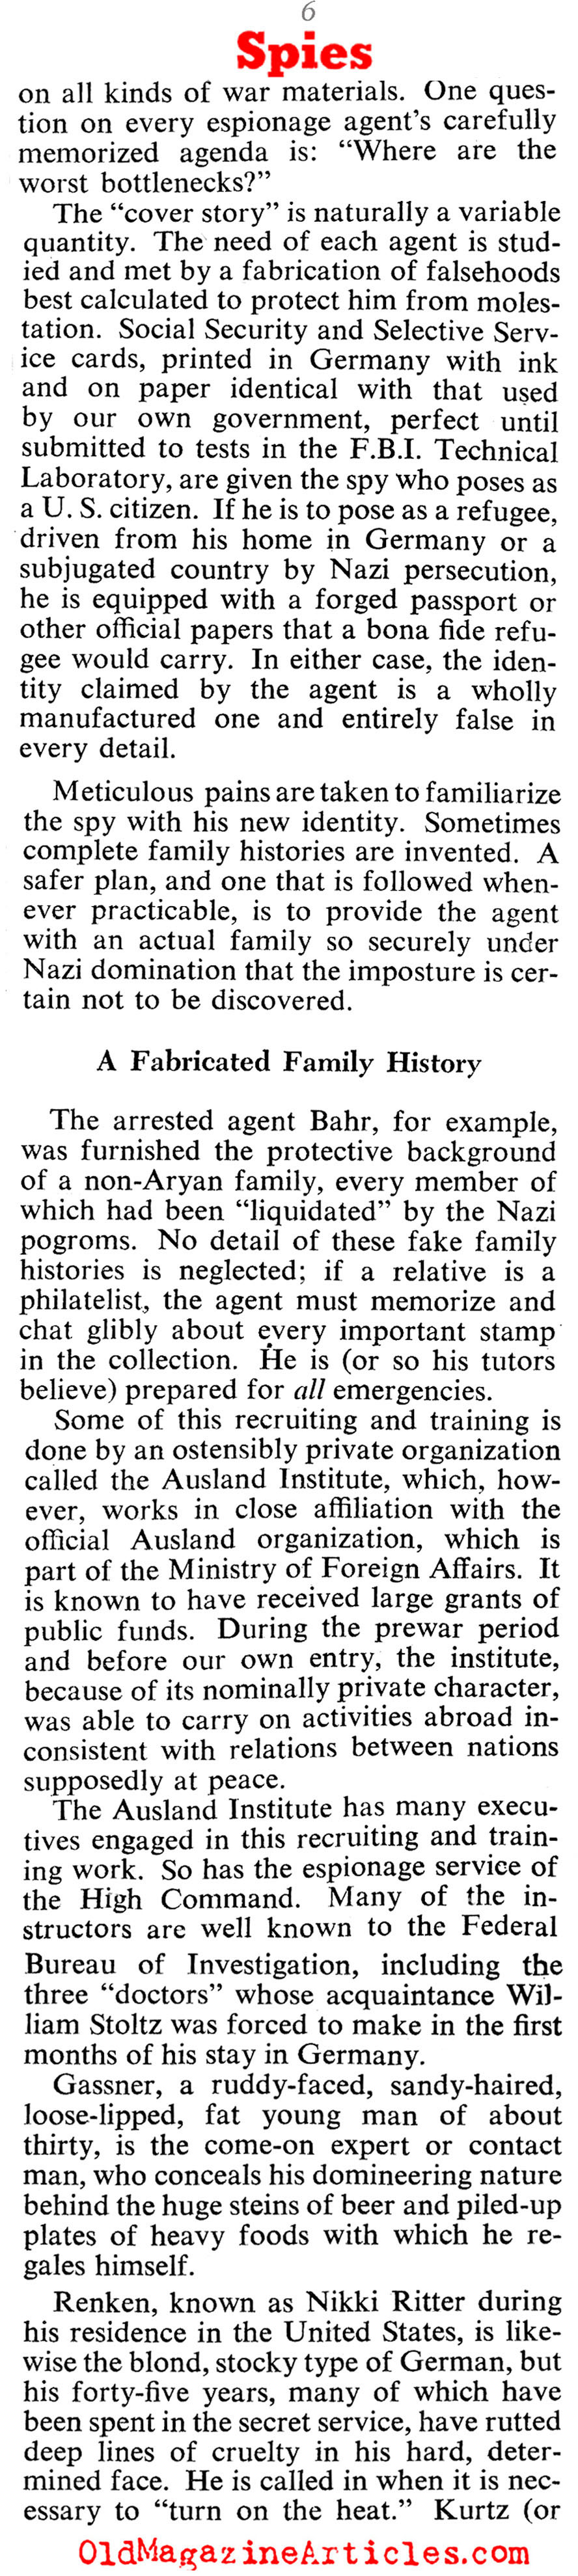 The Nazi Spy Factories (Collier's Magazine, 1943)